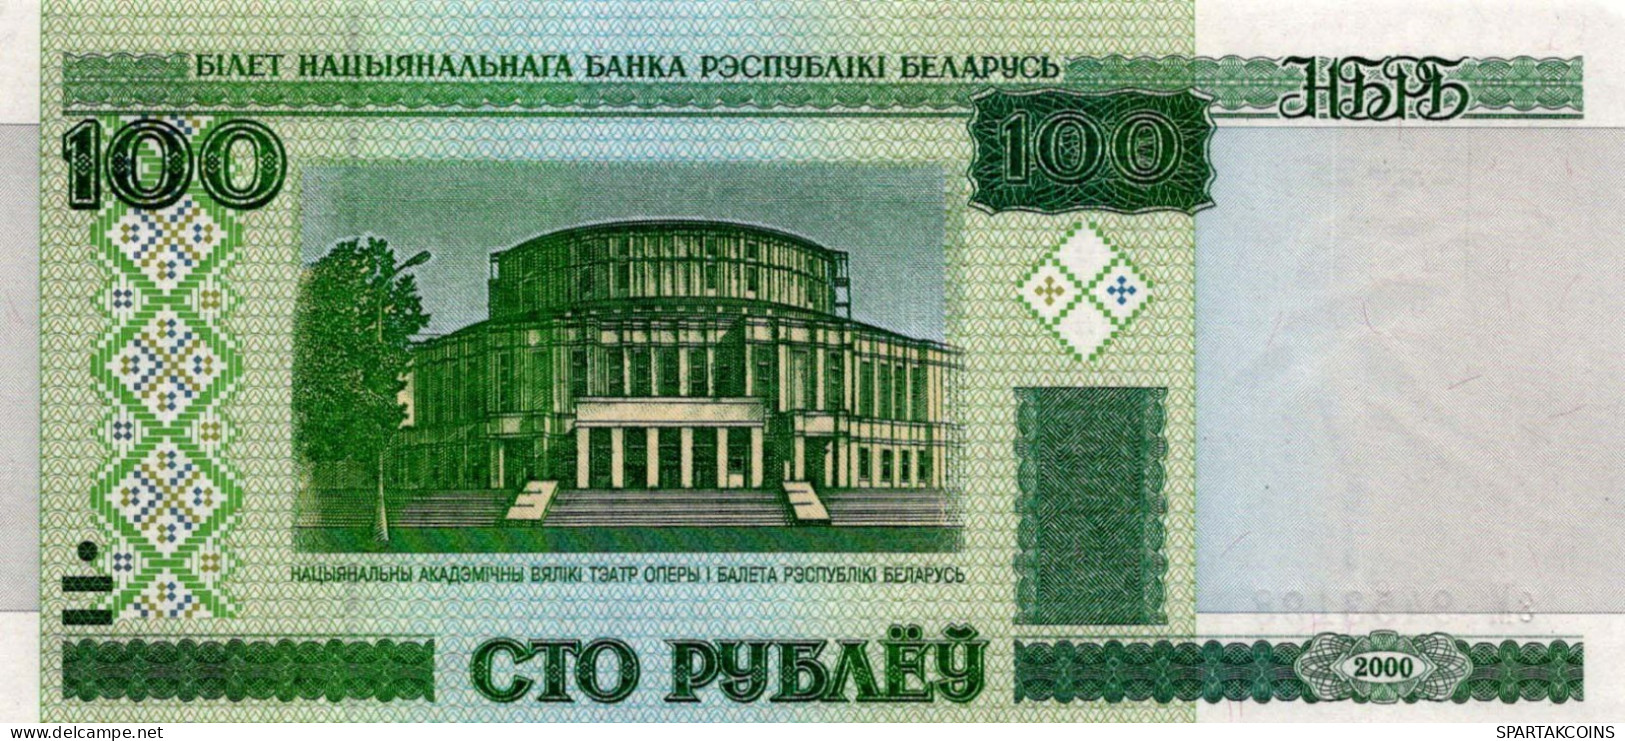 100 RUBLES 2000 BELARUS Papiergeld Banknote #PJ305 - [11] Emissions Locales